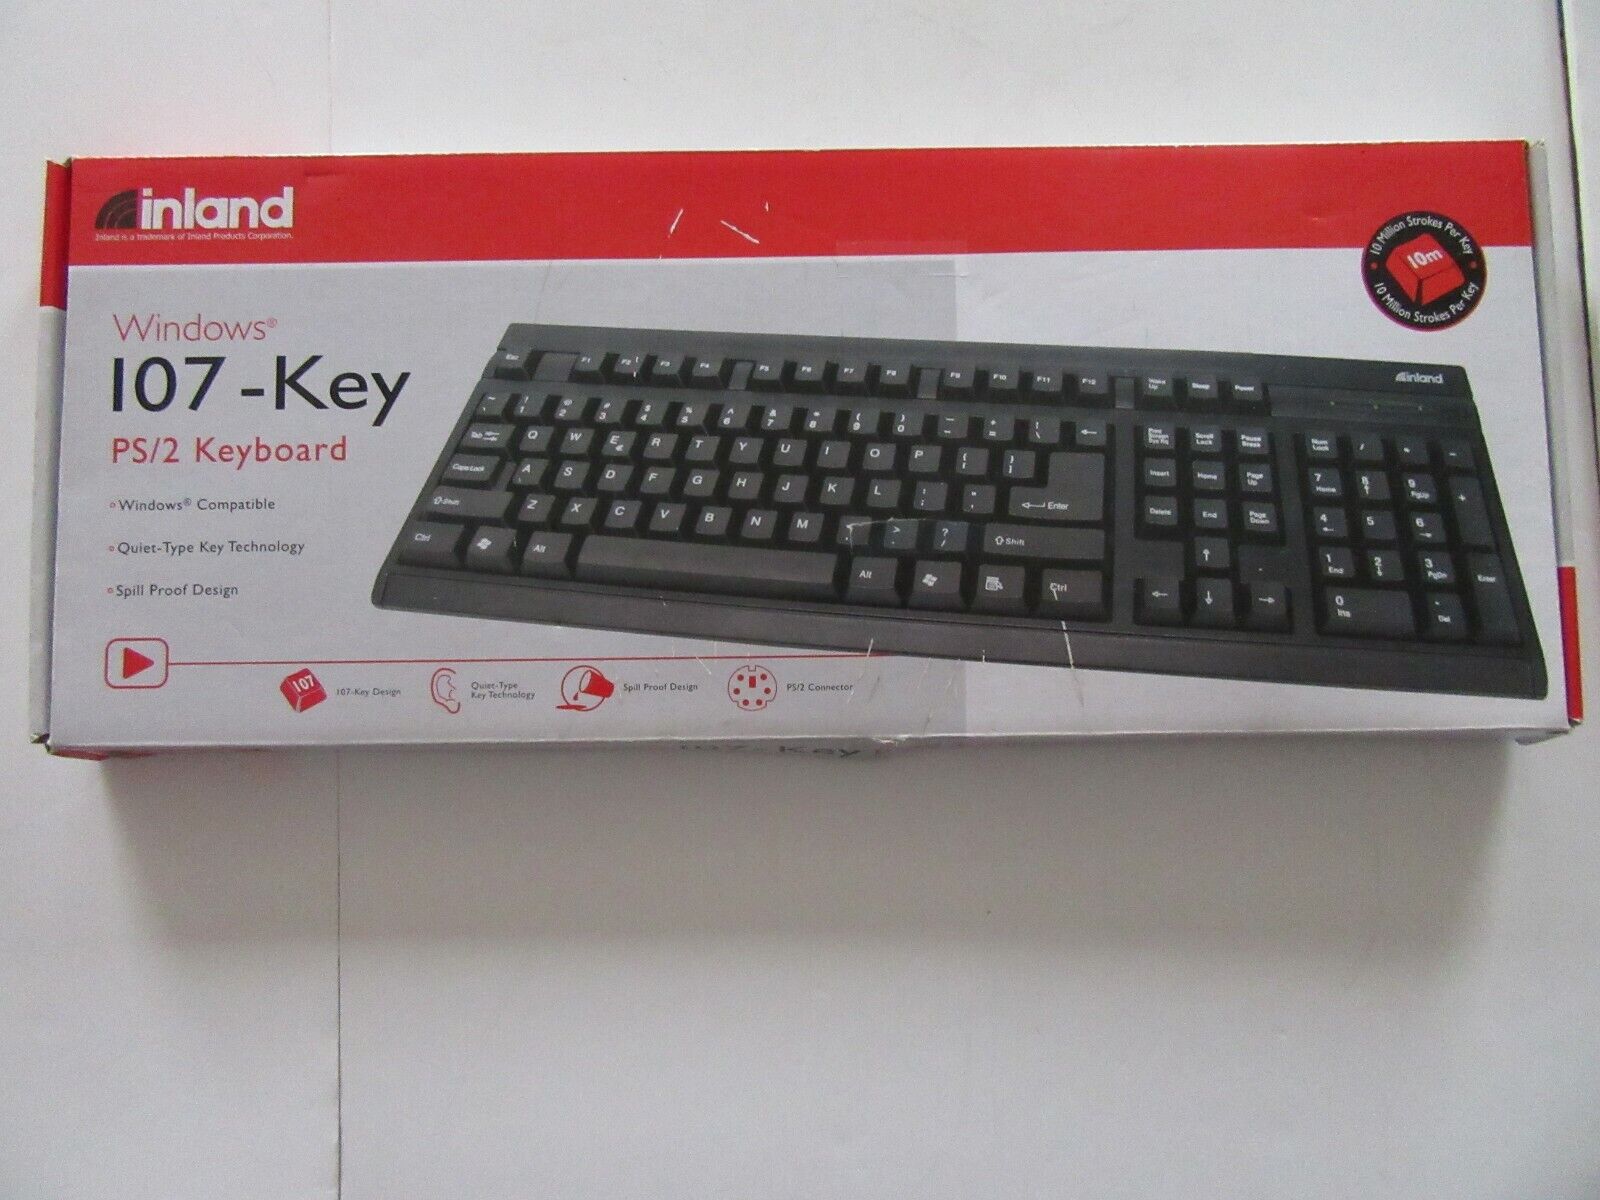 NIP Inland Windows 107 Key PS/2 Keyboard Quiet Type Spill Proof MC855718